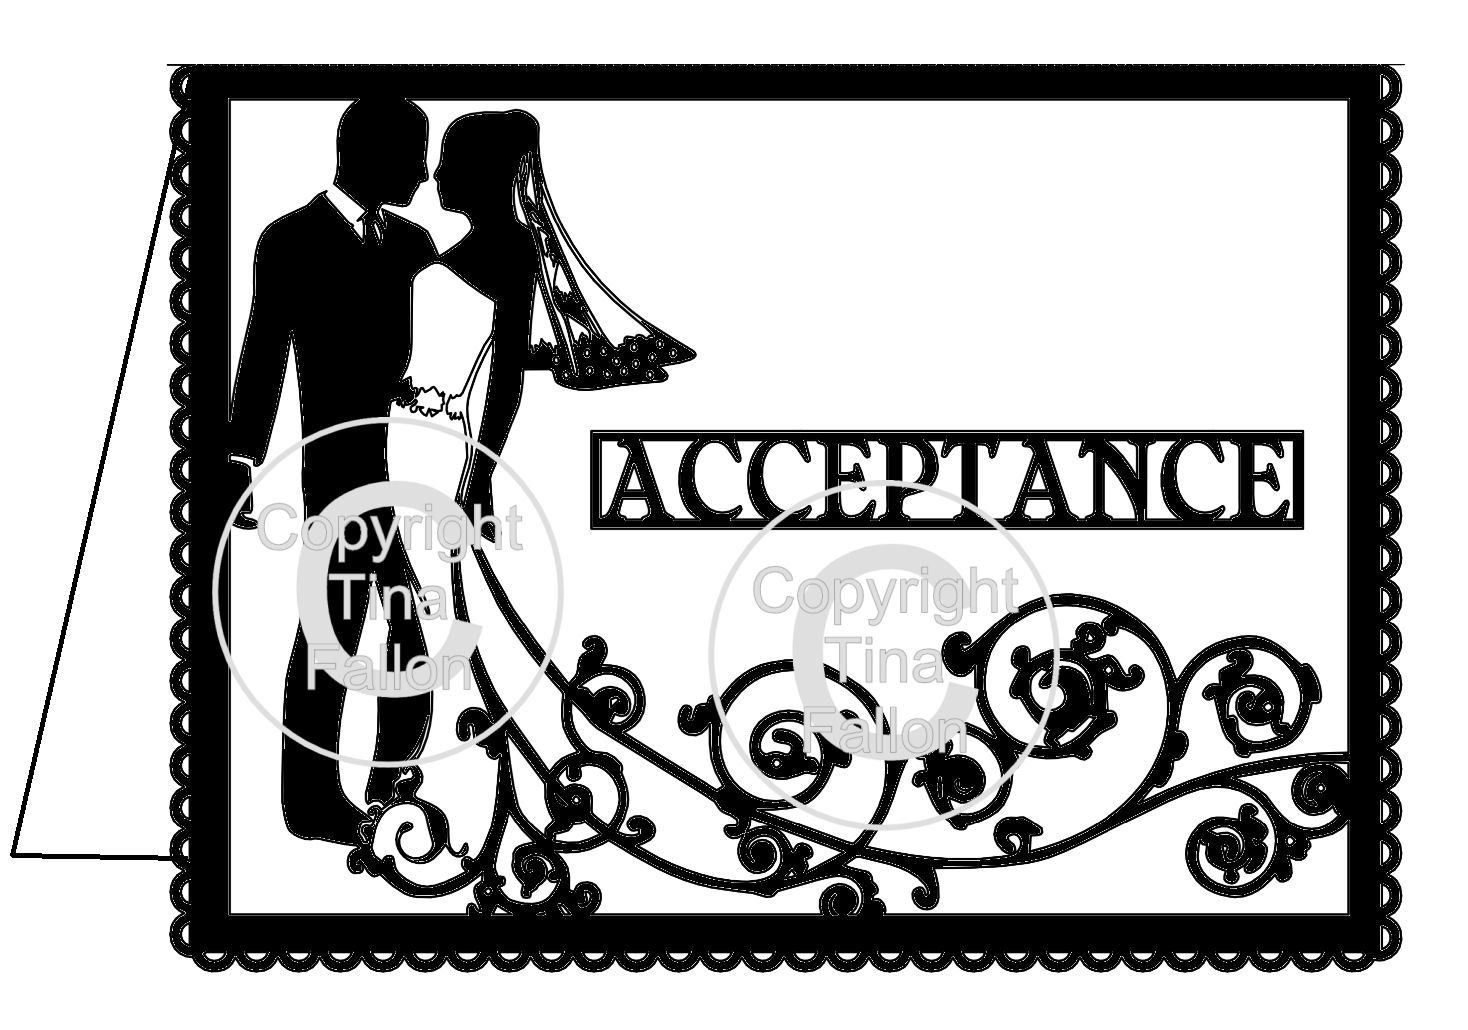 Wedding Acceptance Card Groom and Bride Swirl please read info